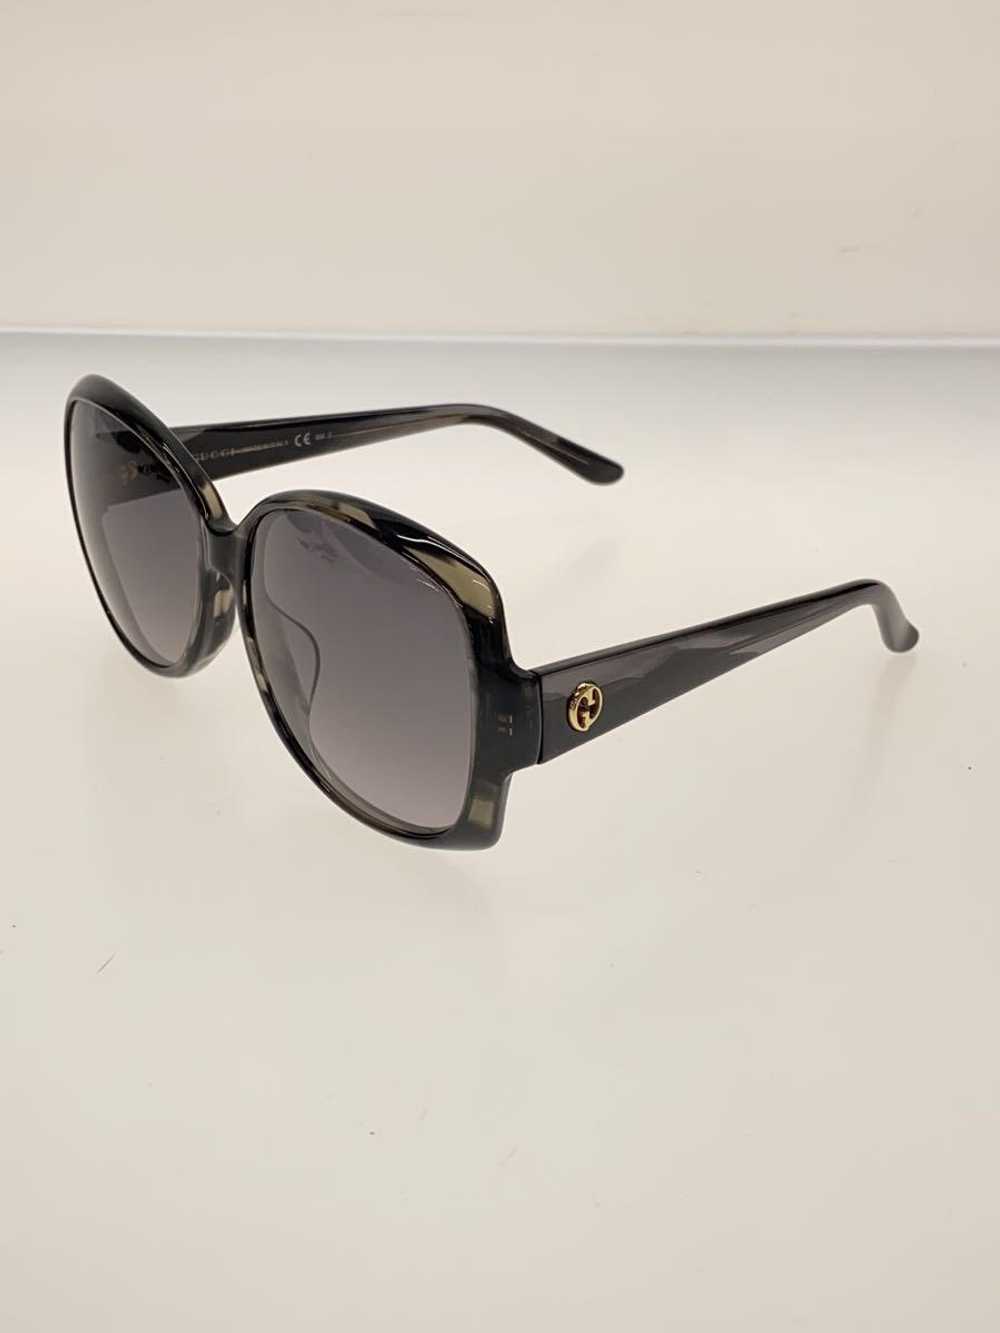 Used Gucci Sunglasses/Blk/Black/Ladies/Gg3596 - image 2